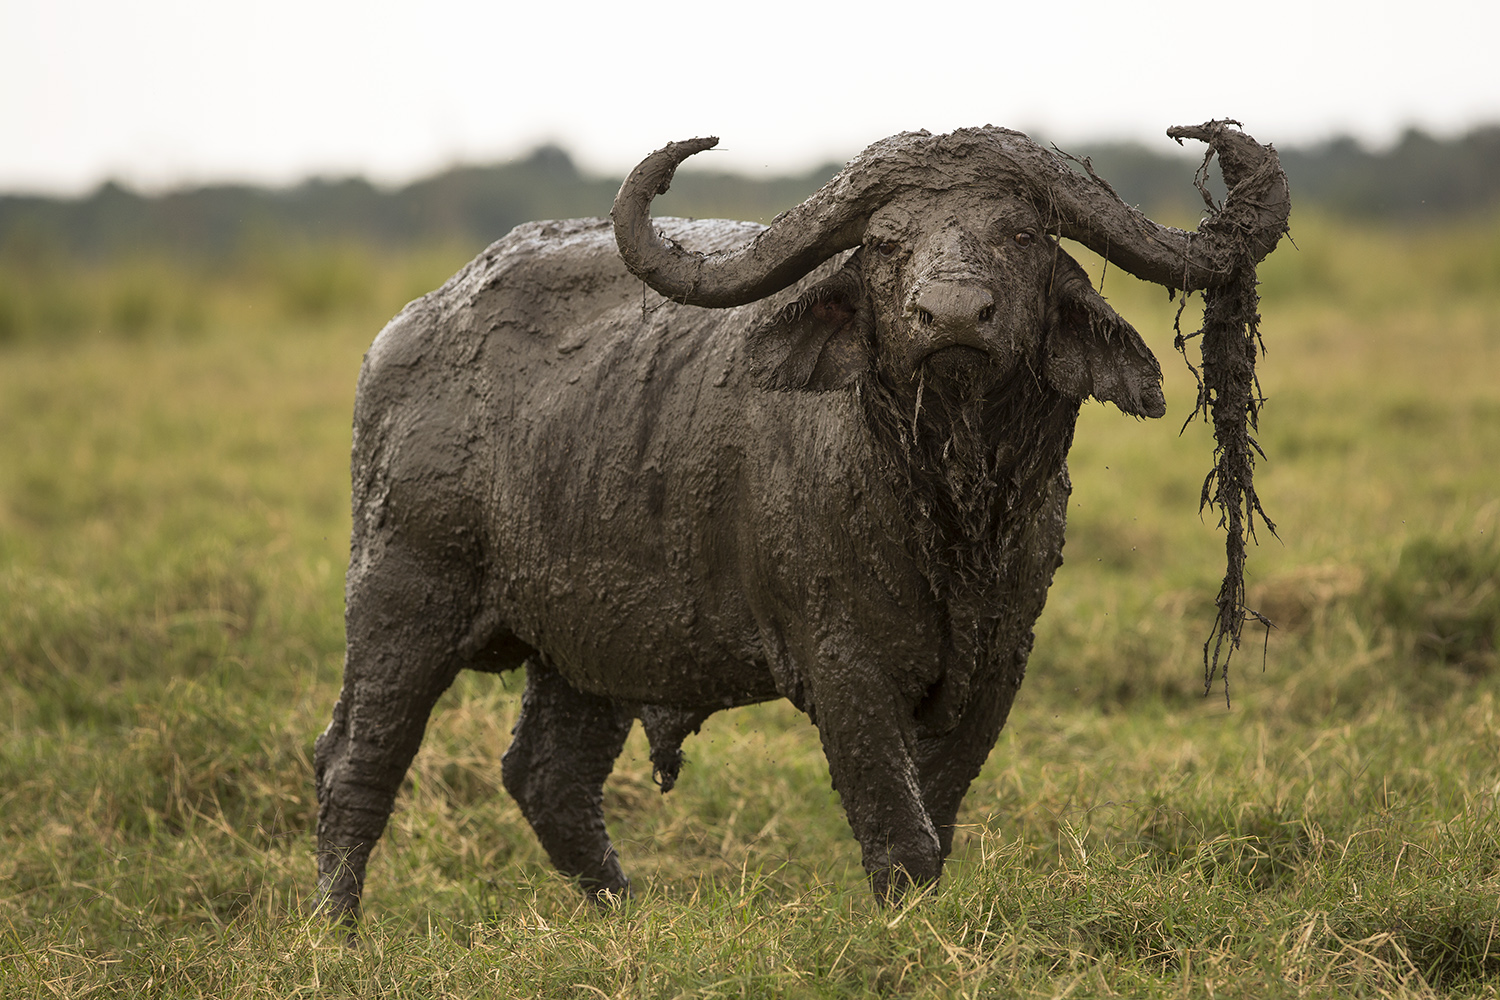 Buffalo with mud